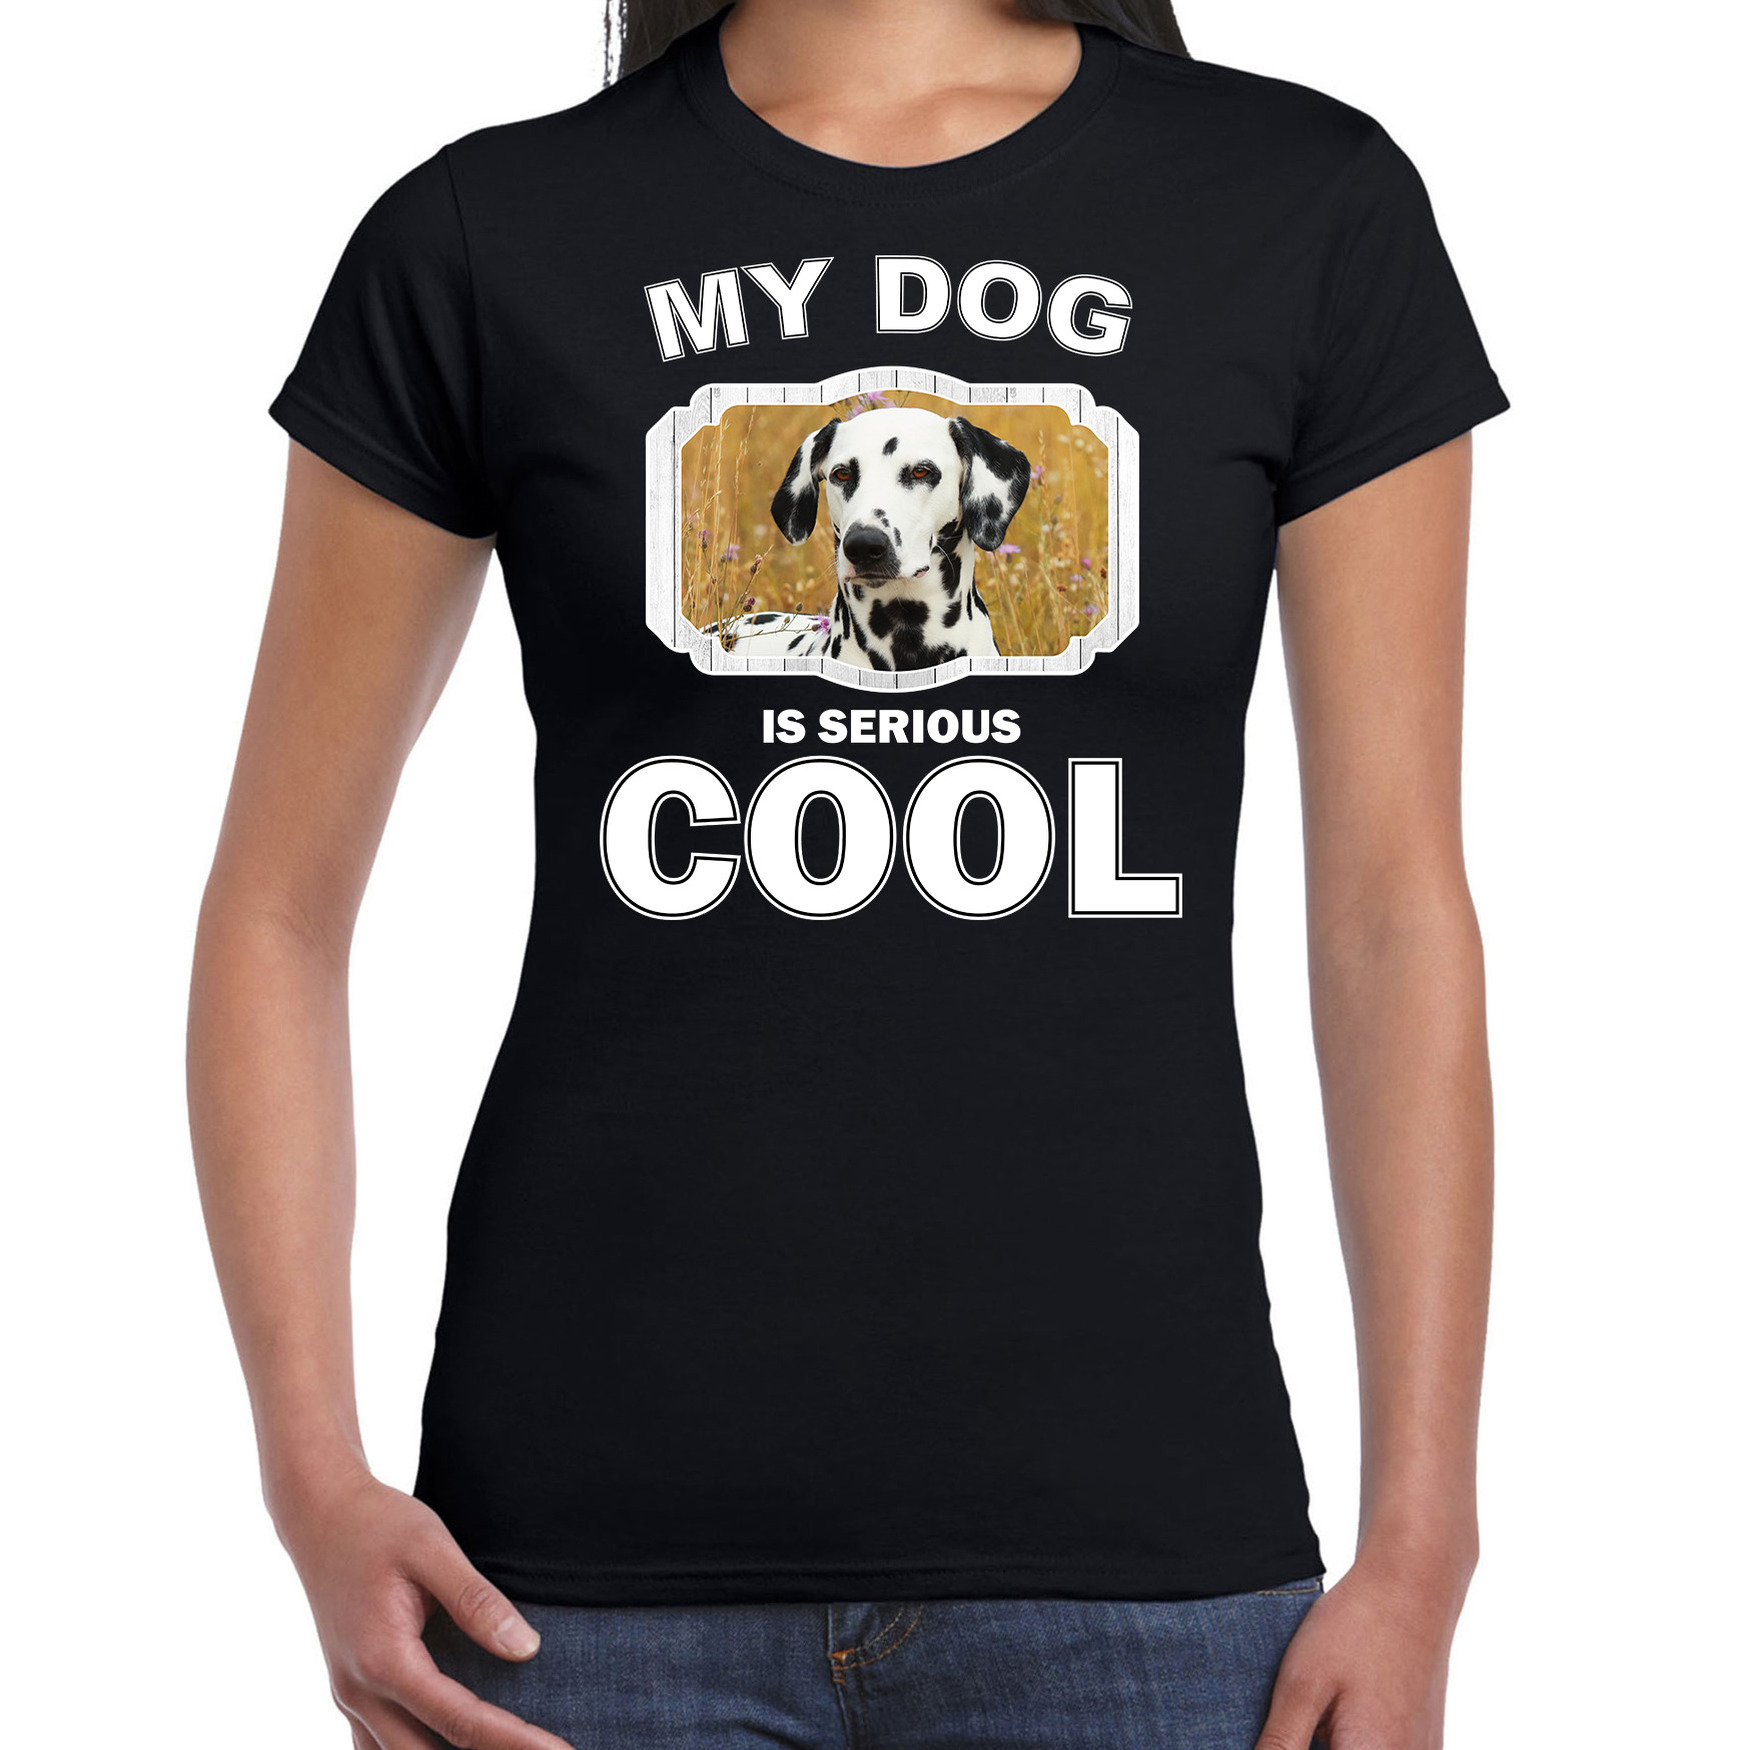 Dalmatier honden t-shirt my dog is serious cool zwart voor dames